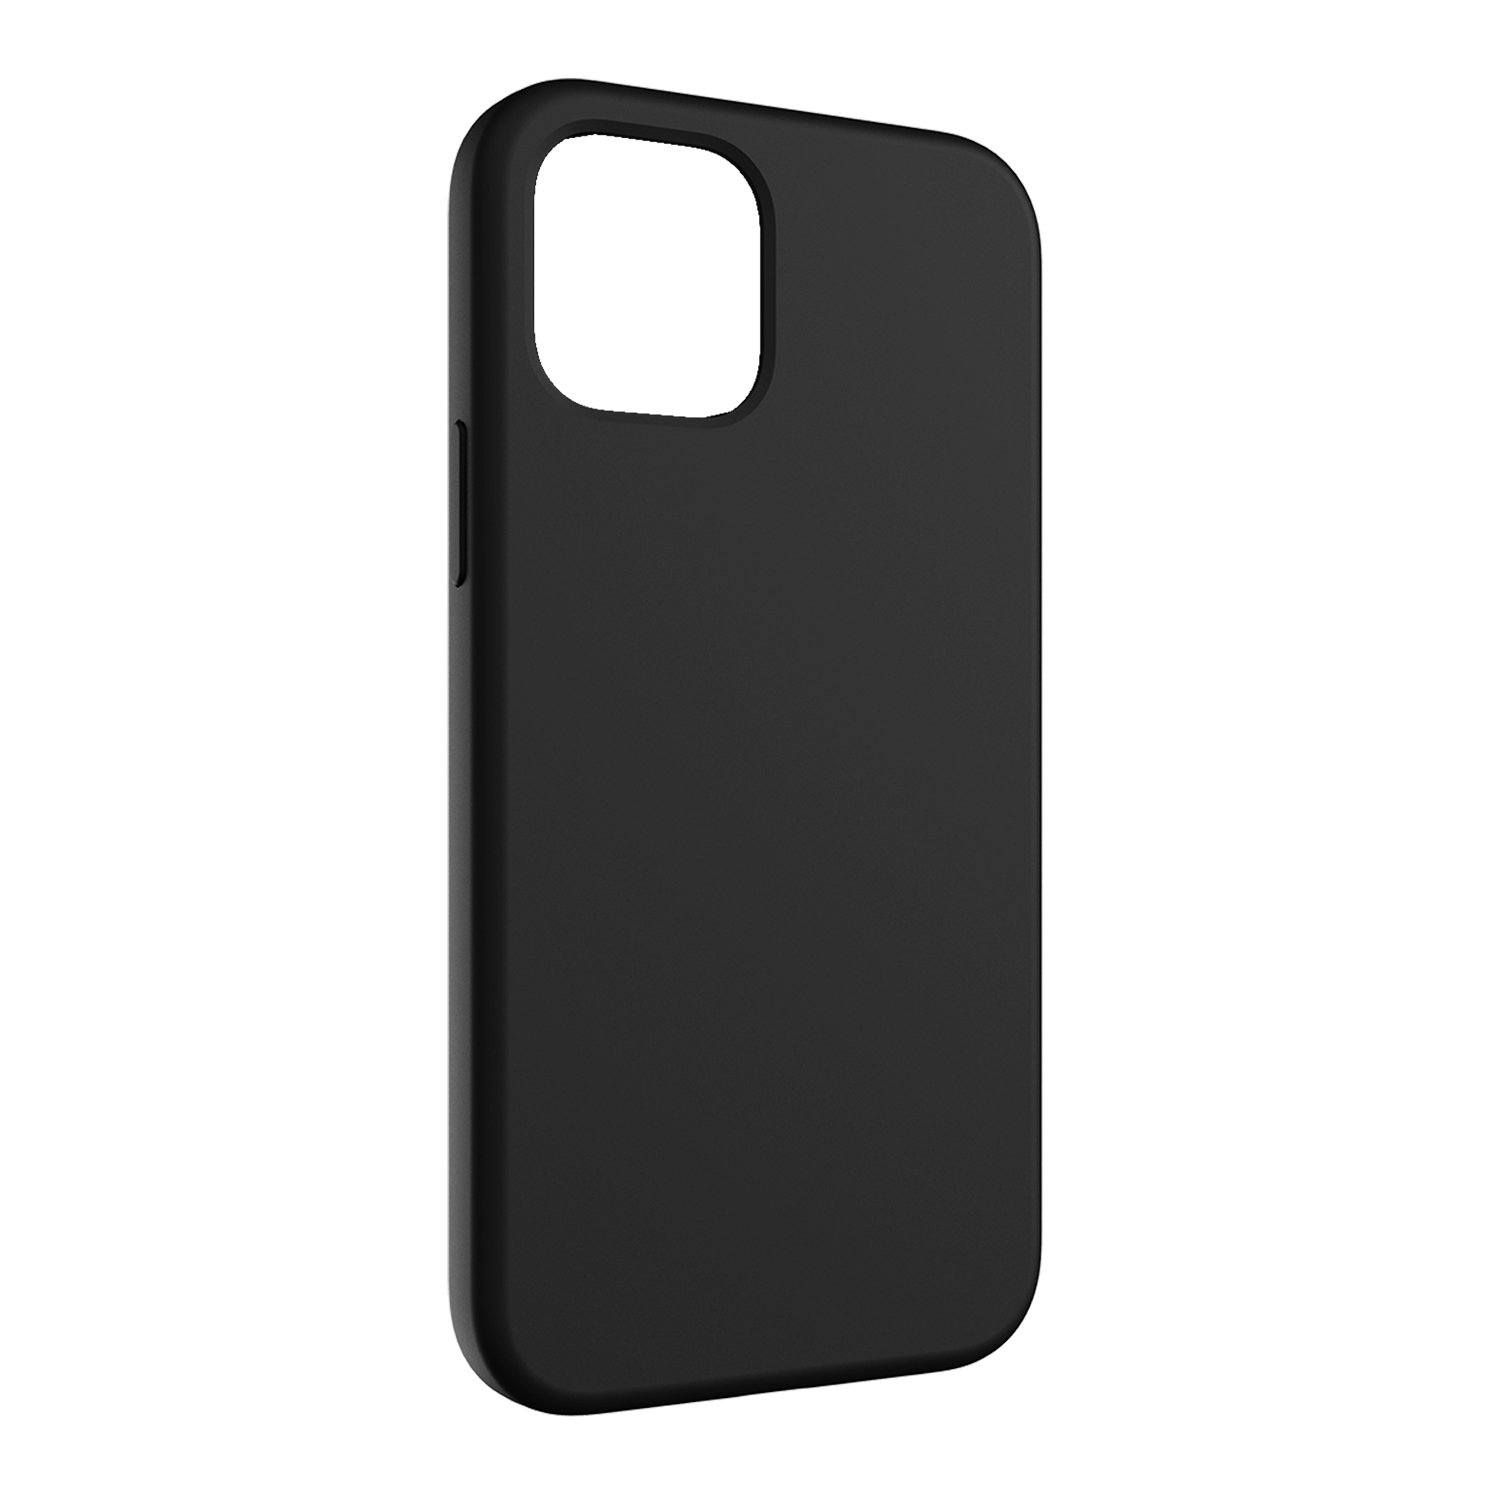 Switcheasy Skin Case for iPhone 12/12 Pro 6.1"(2020), Black Default Switcheasy 